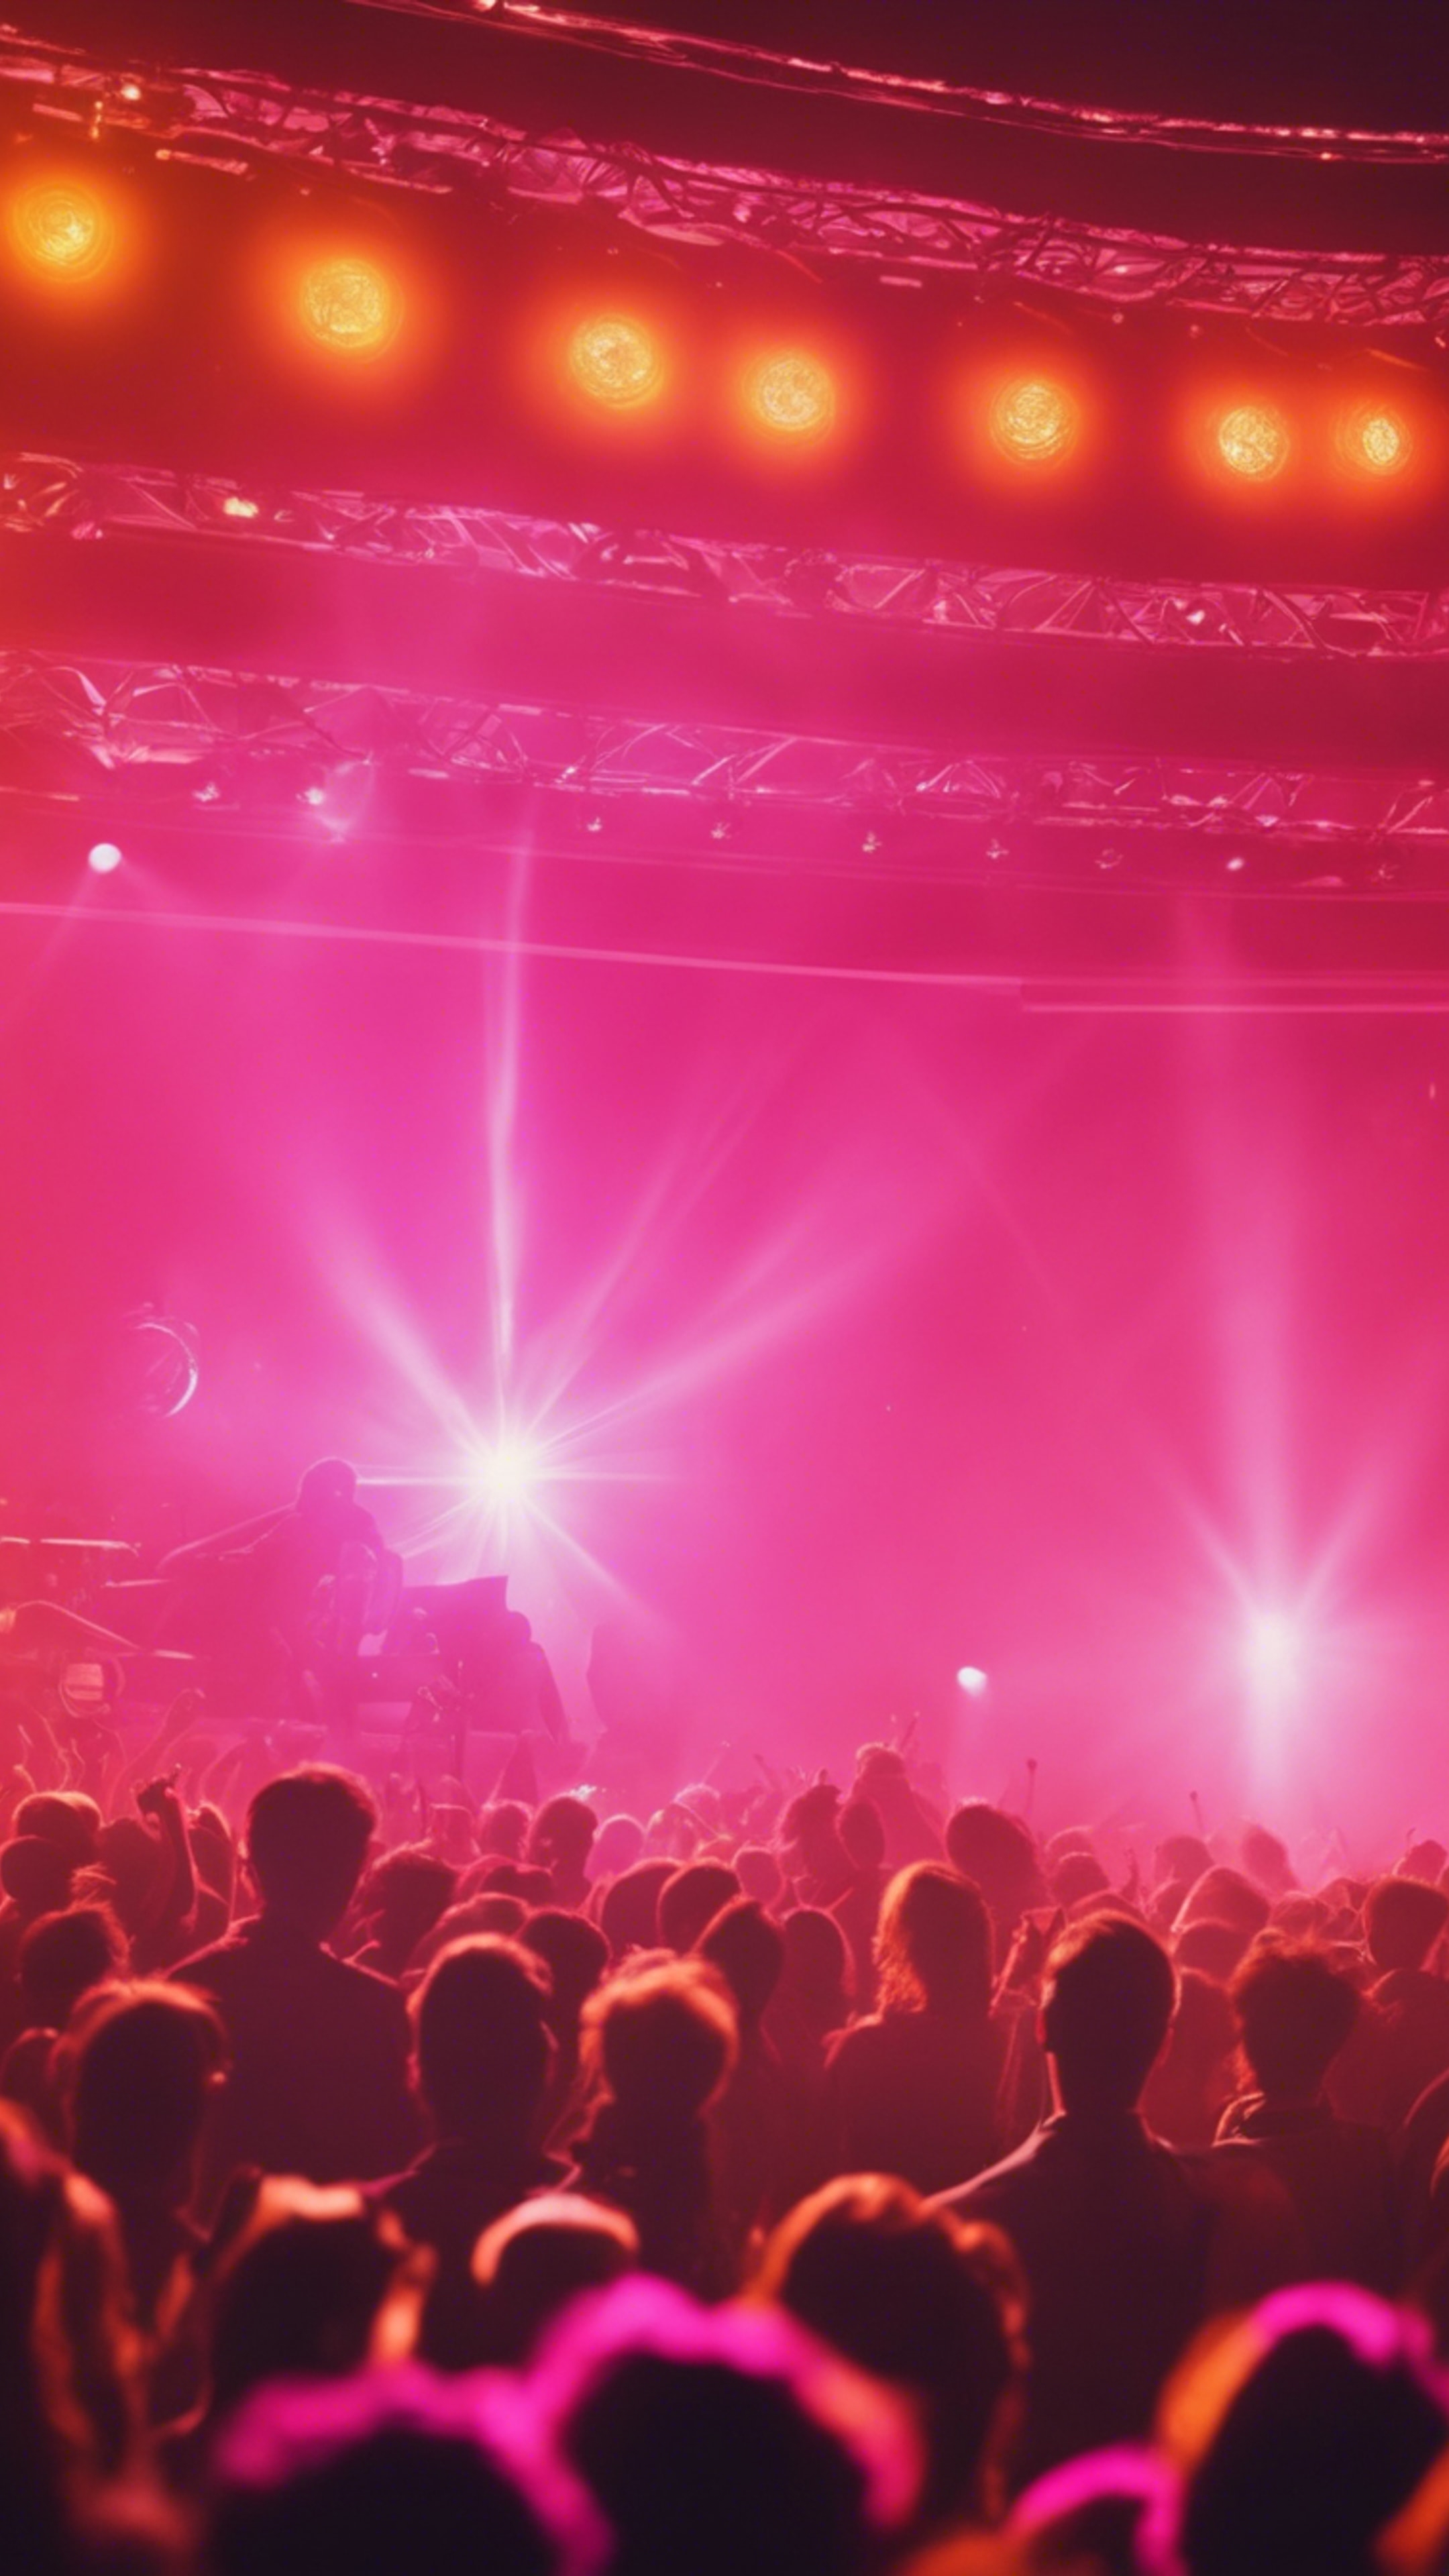 Bright orange flares from an 80s music concert with a pink stage lighting. duvar kağıdı[6011018ba8cb439fb9ea]